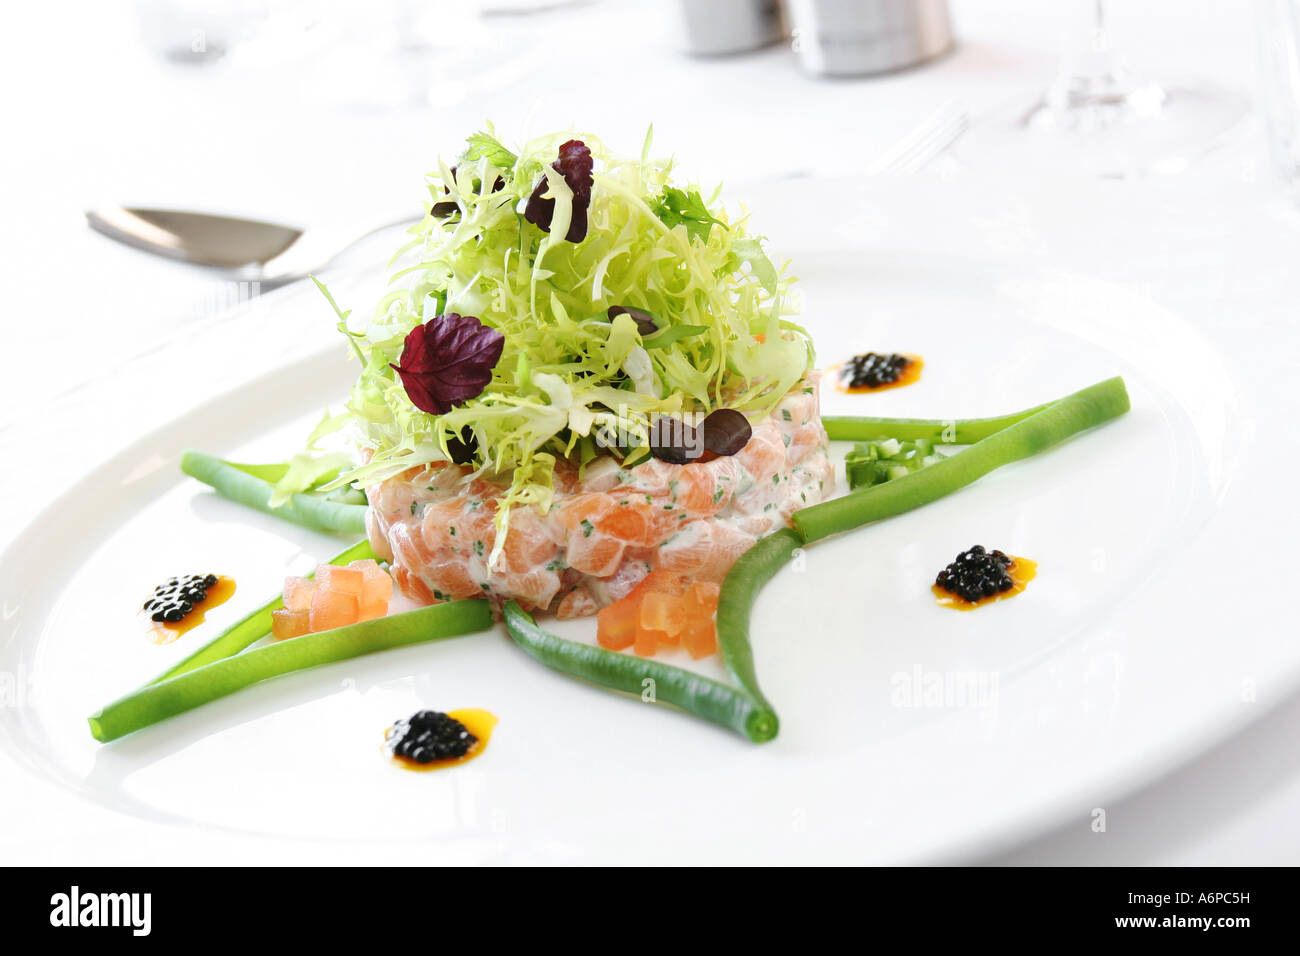 Salmon with salad starter Stock Photo